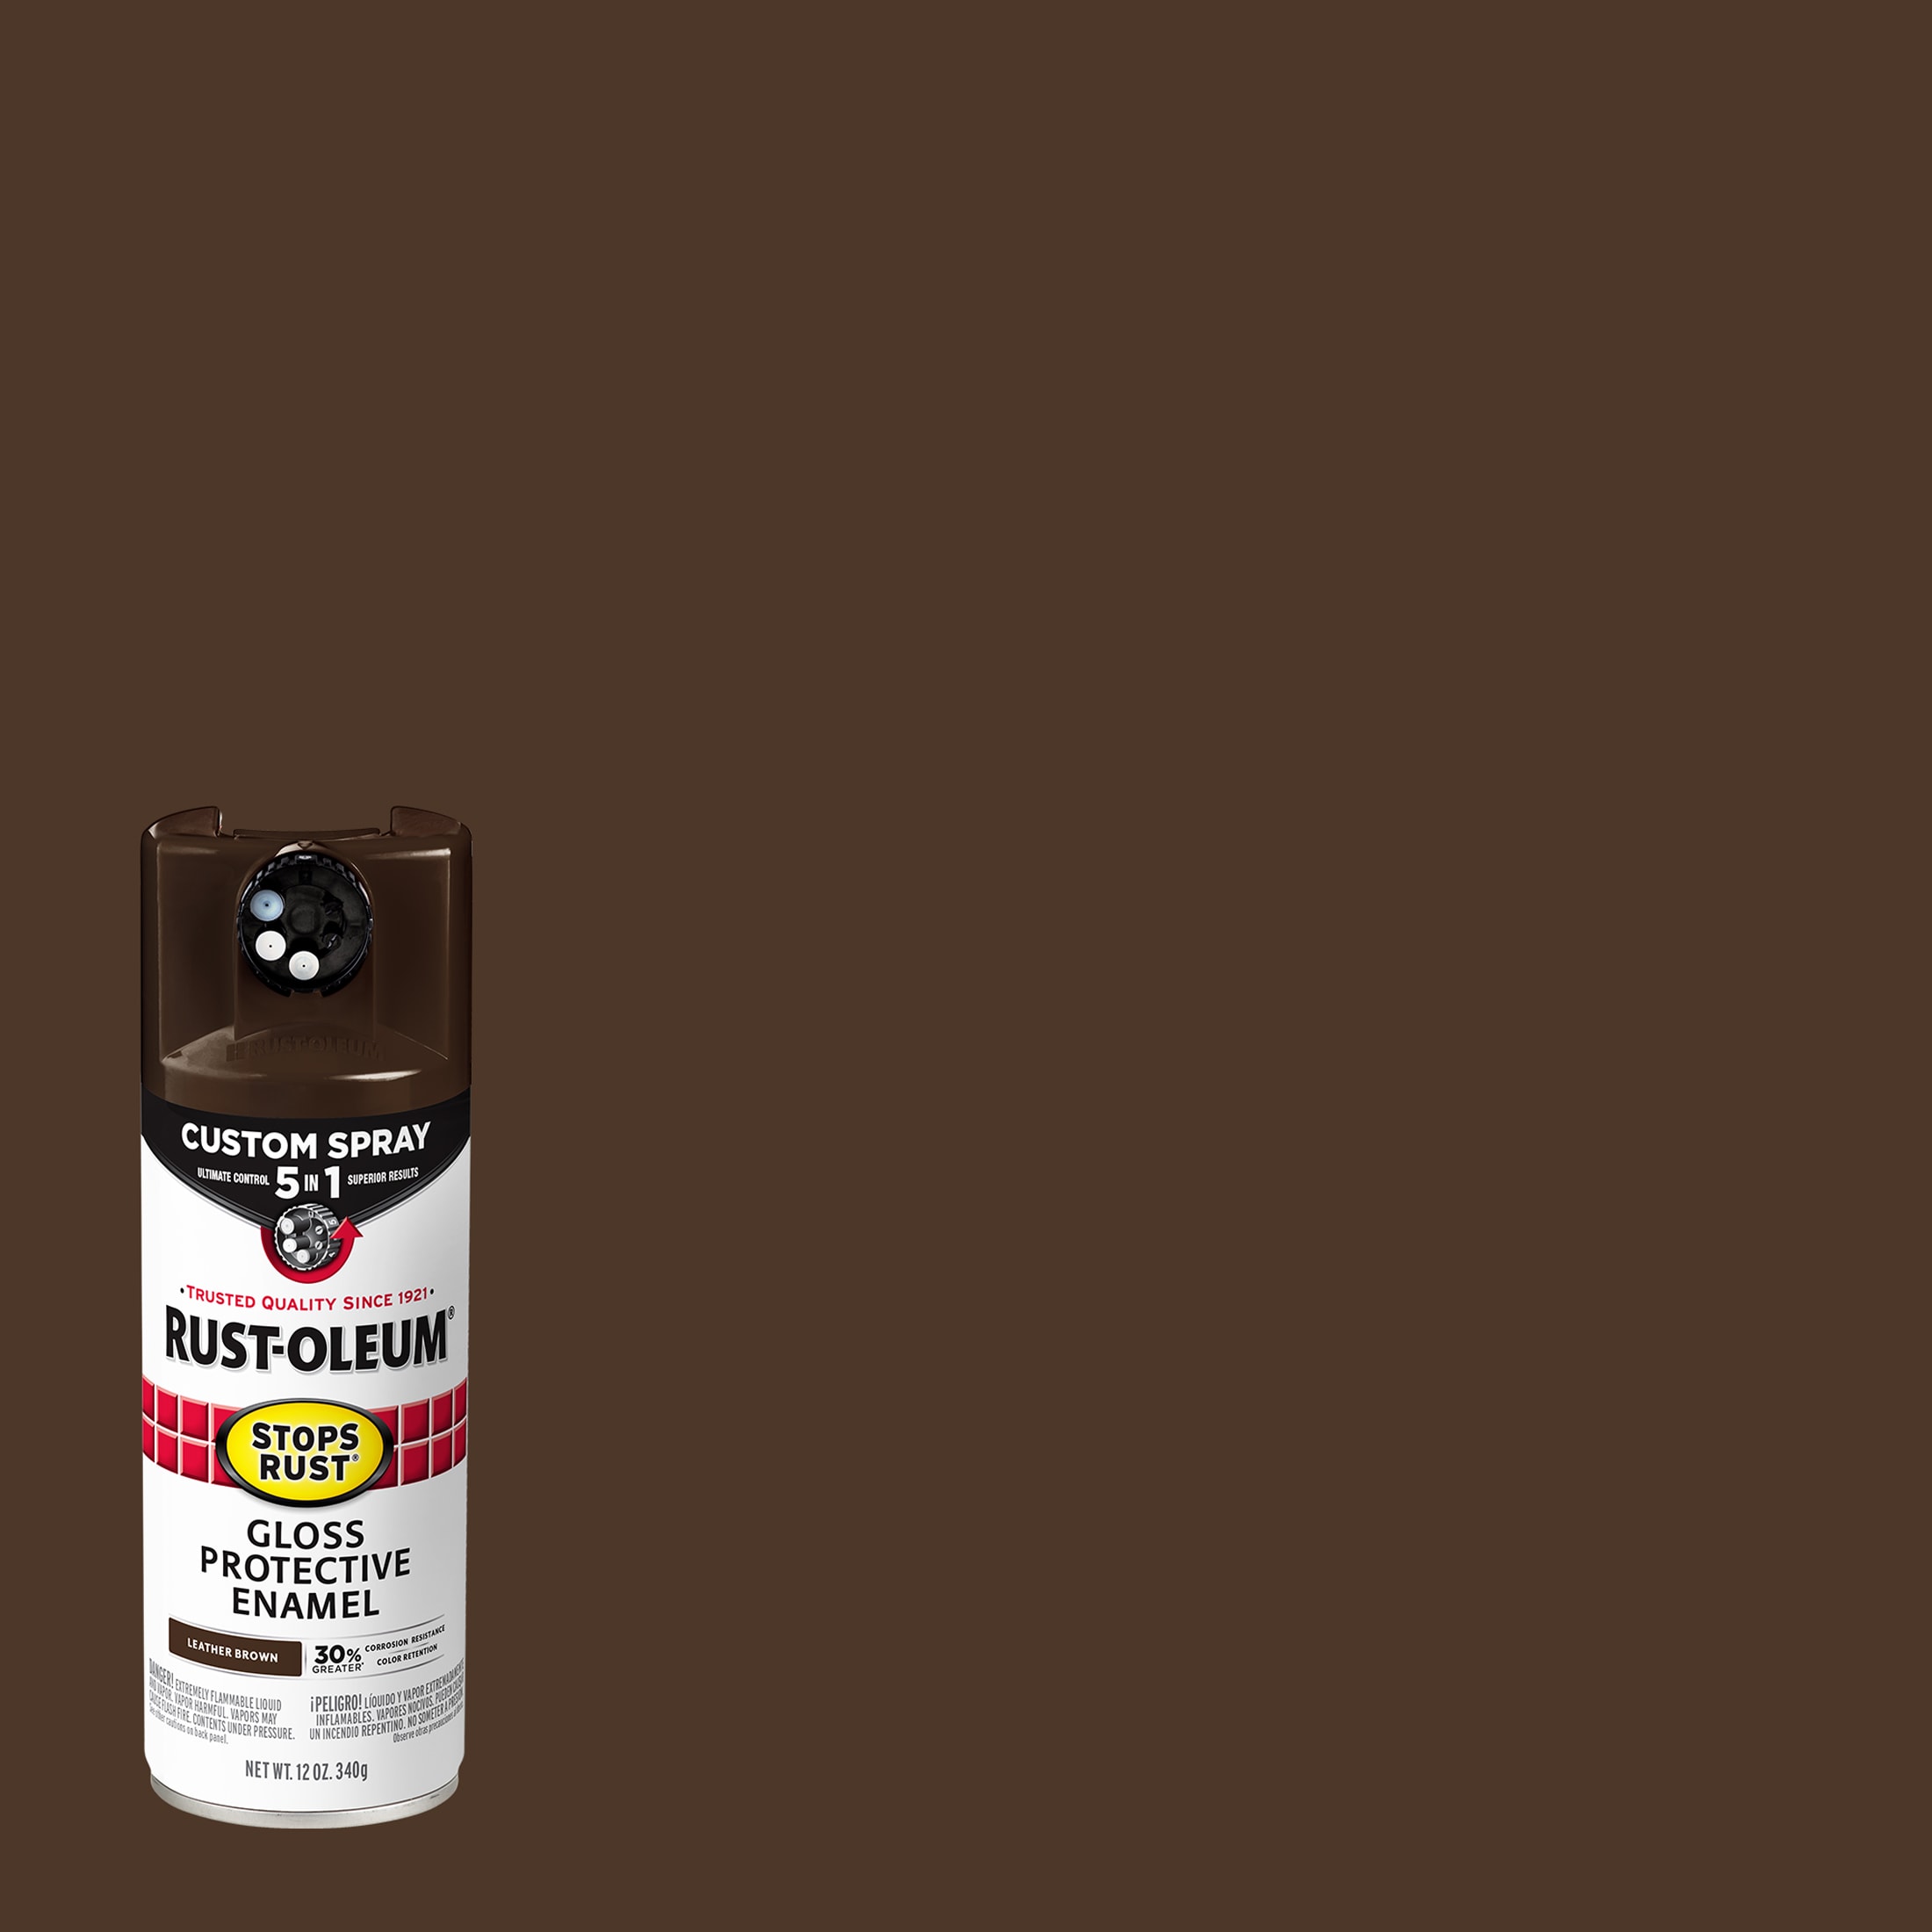 Rust-Oleum 300607 Stops Rust Hammered Spray Paint, 12 oz, Matte Black